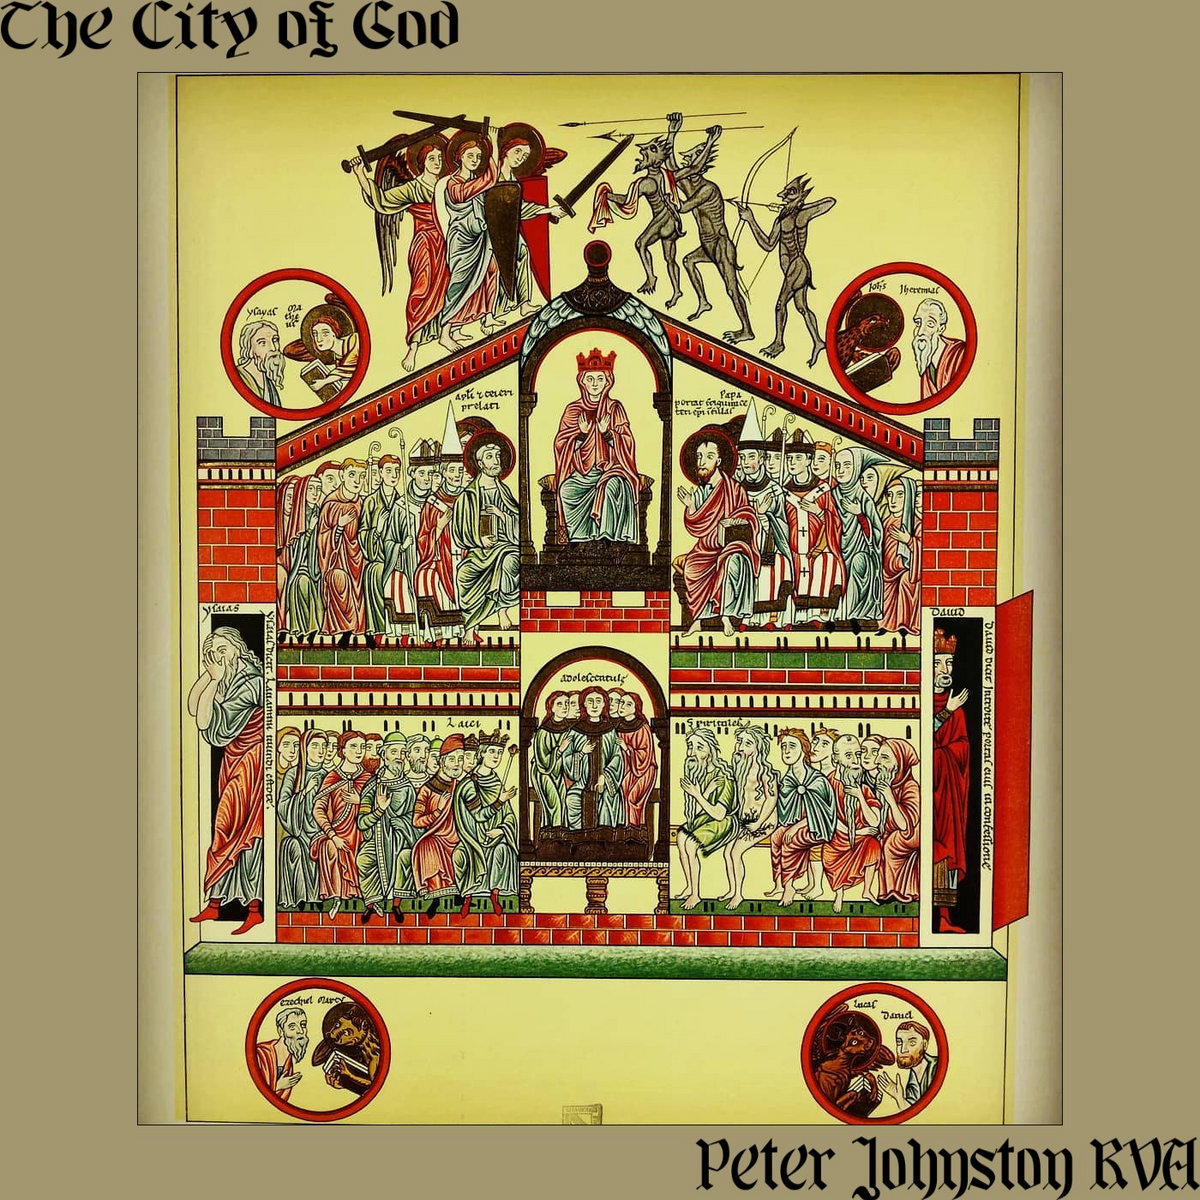 Peter Johnston RVA - The City of God